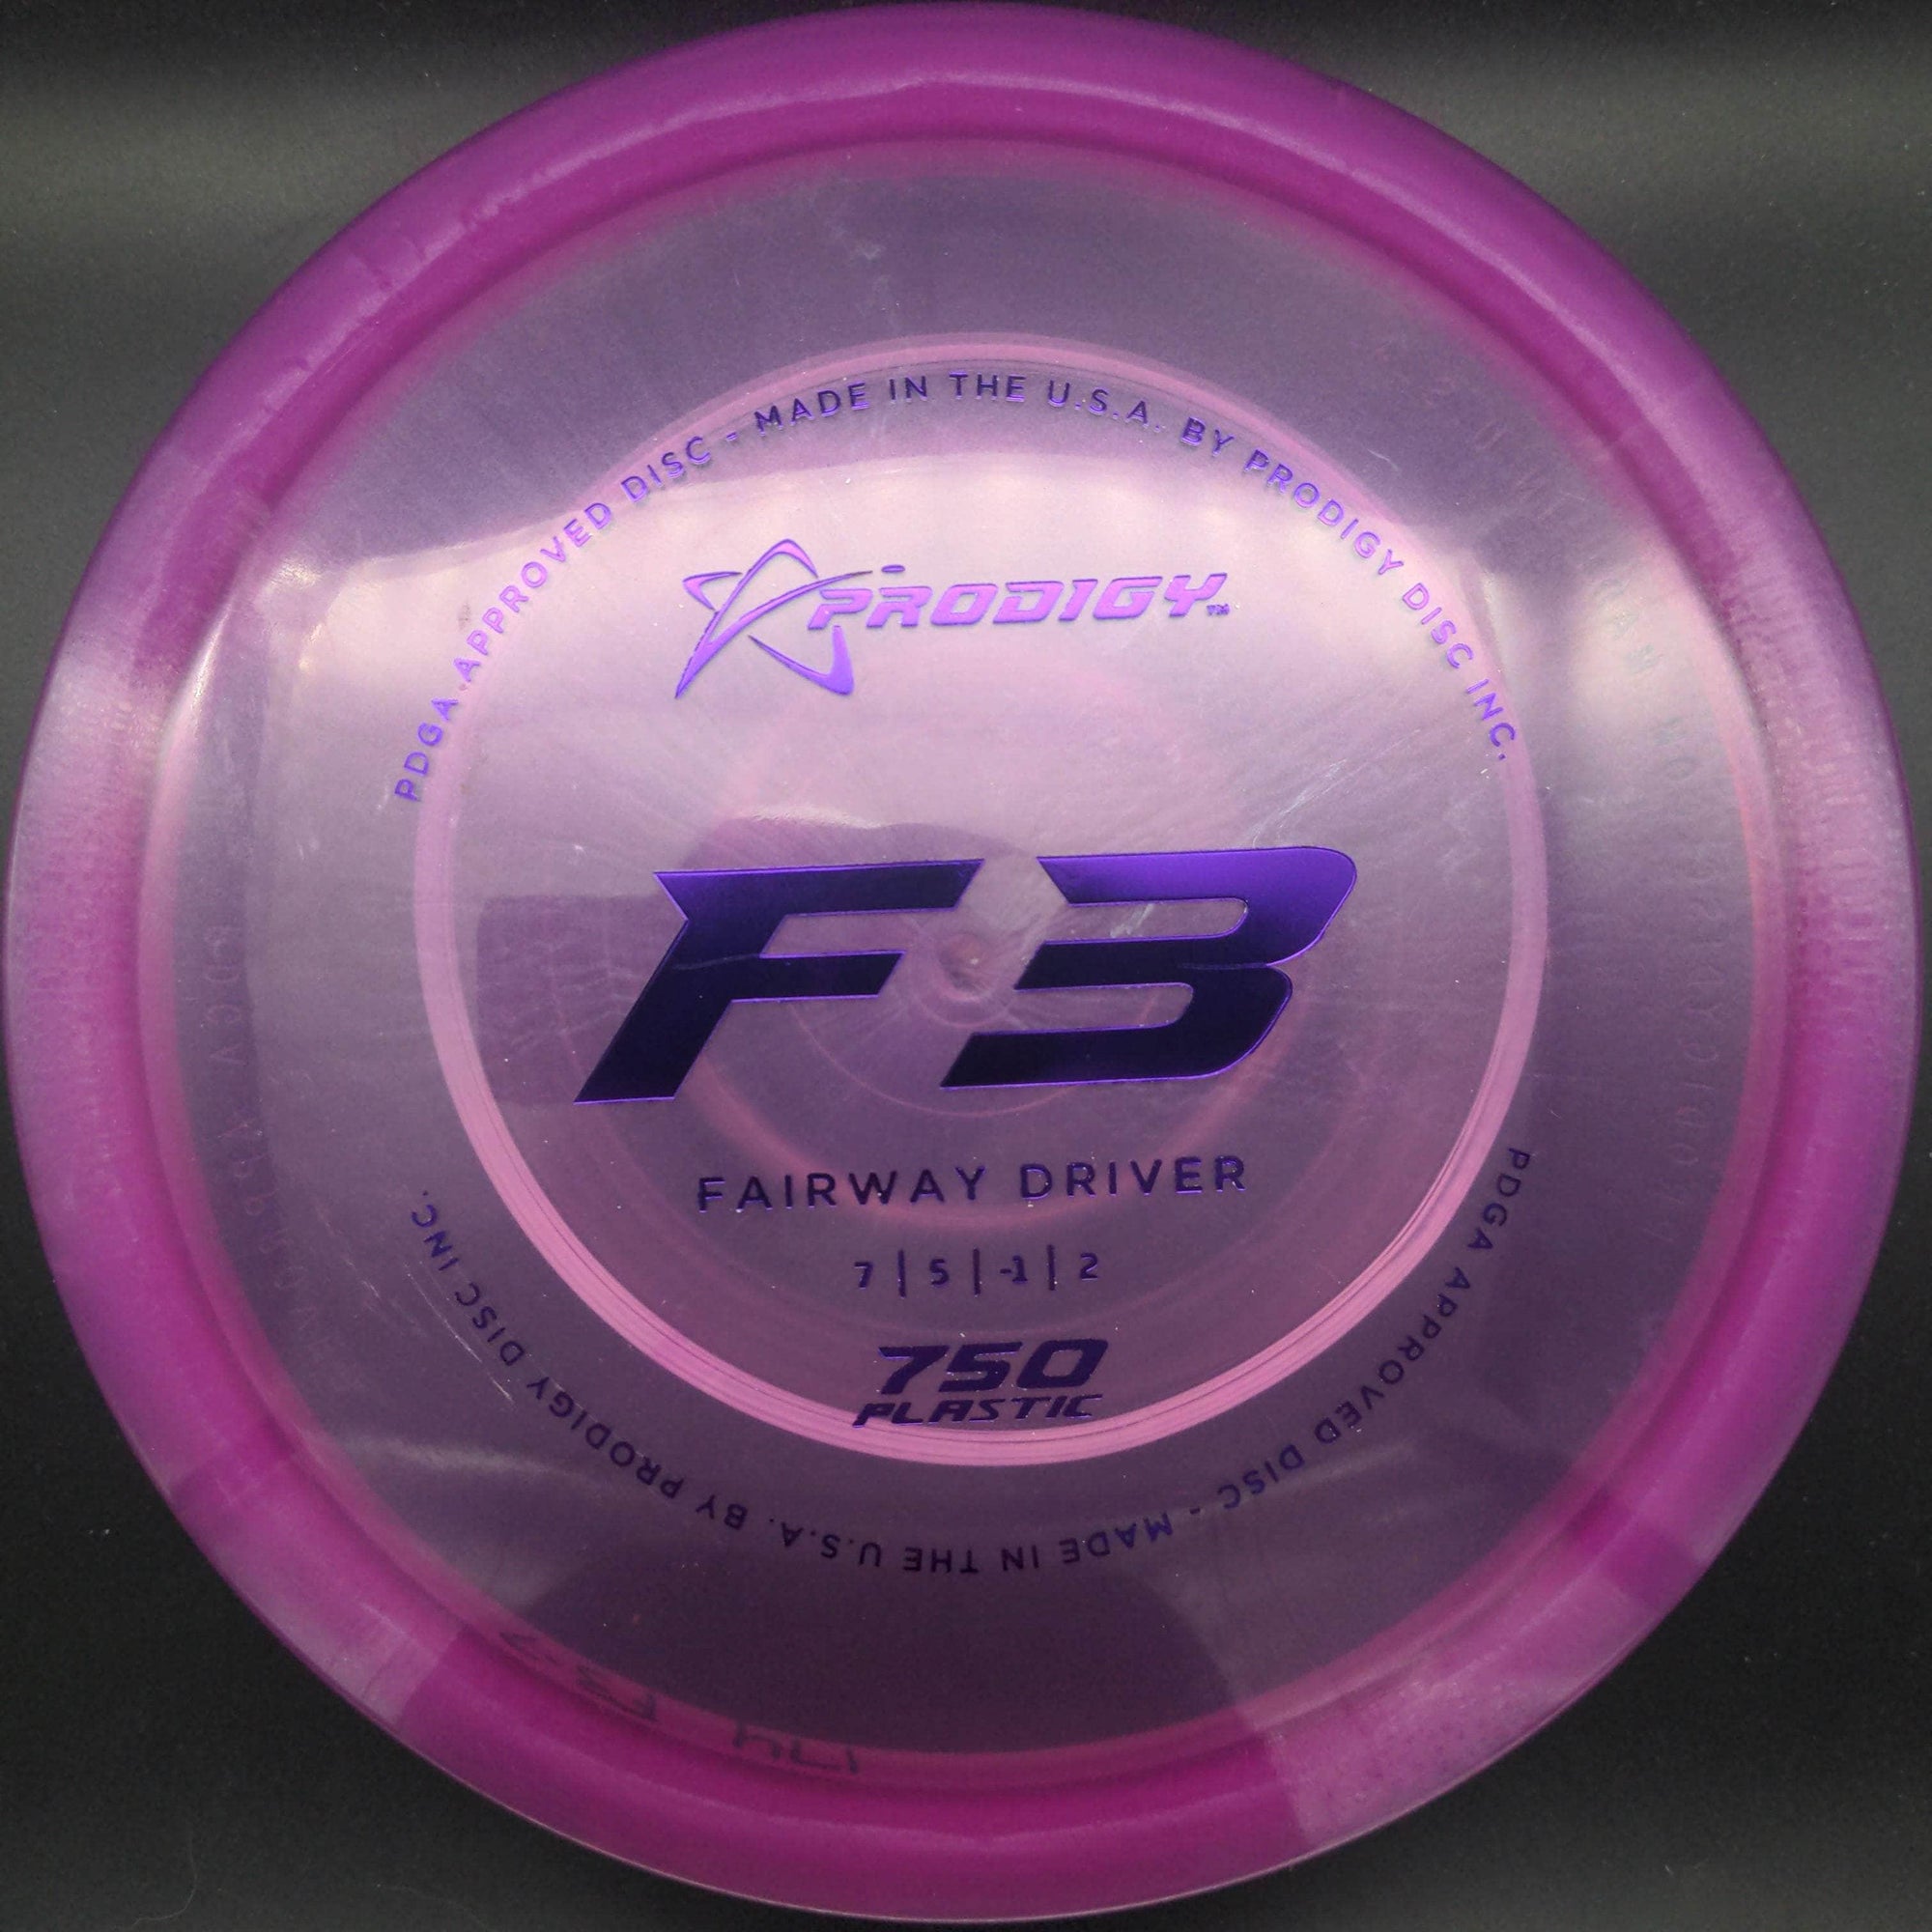 Prodigy Fairway Driver F3, 750 Plastic